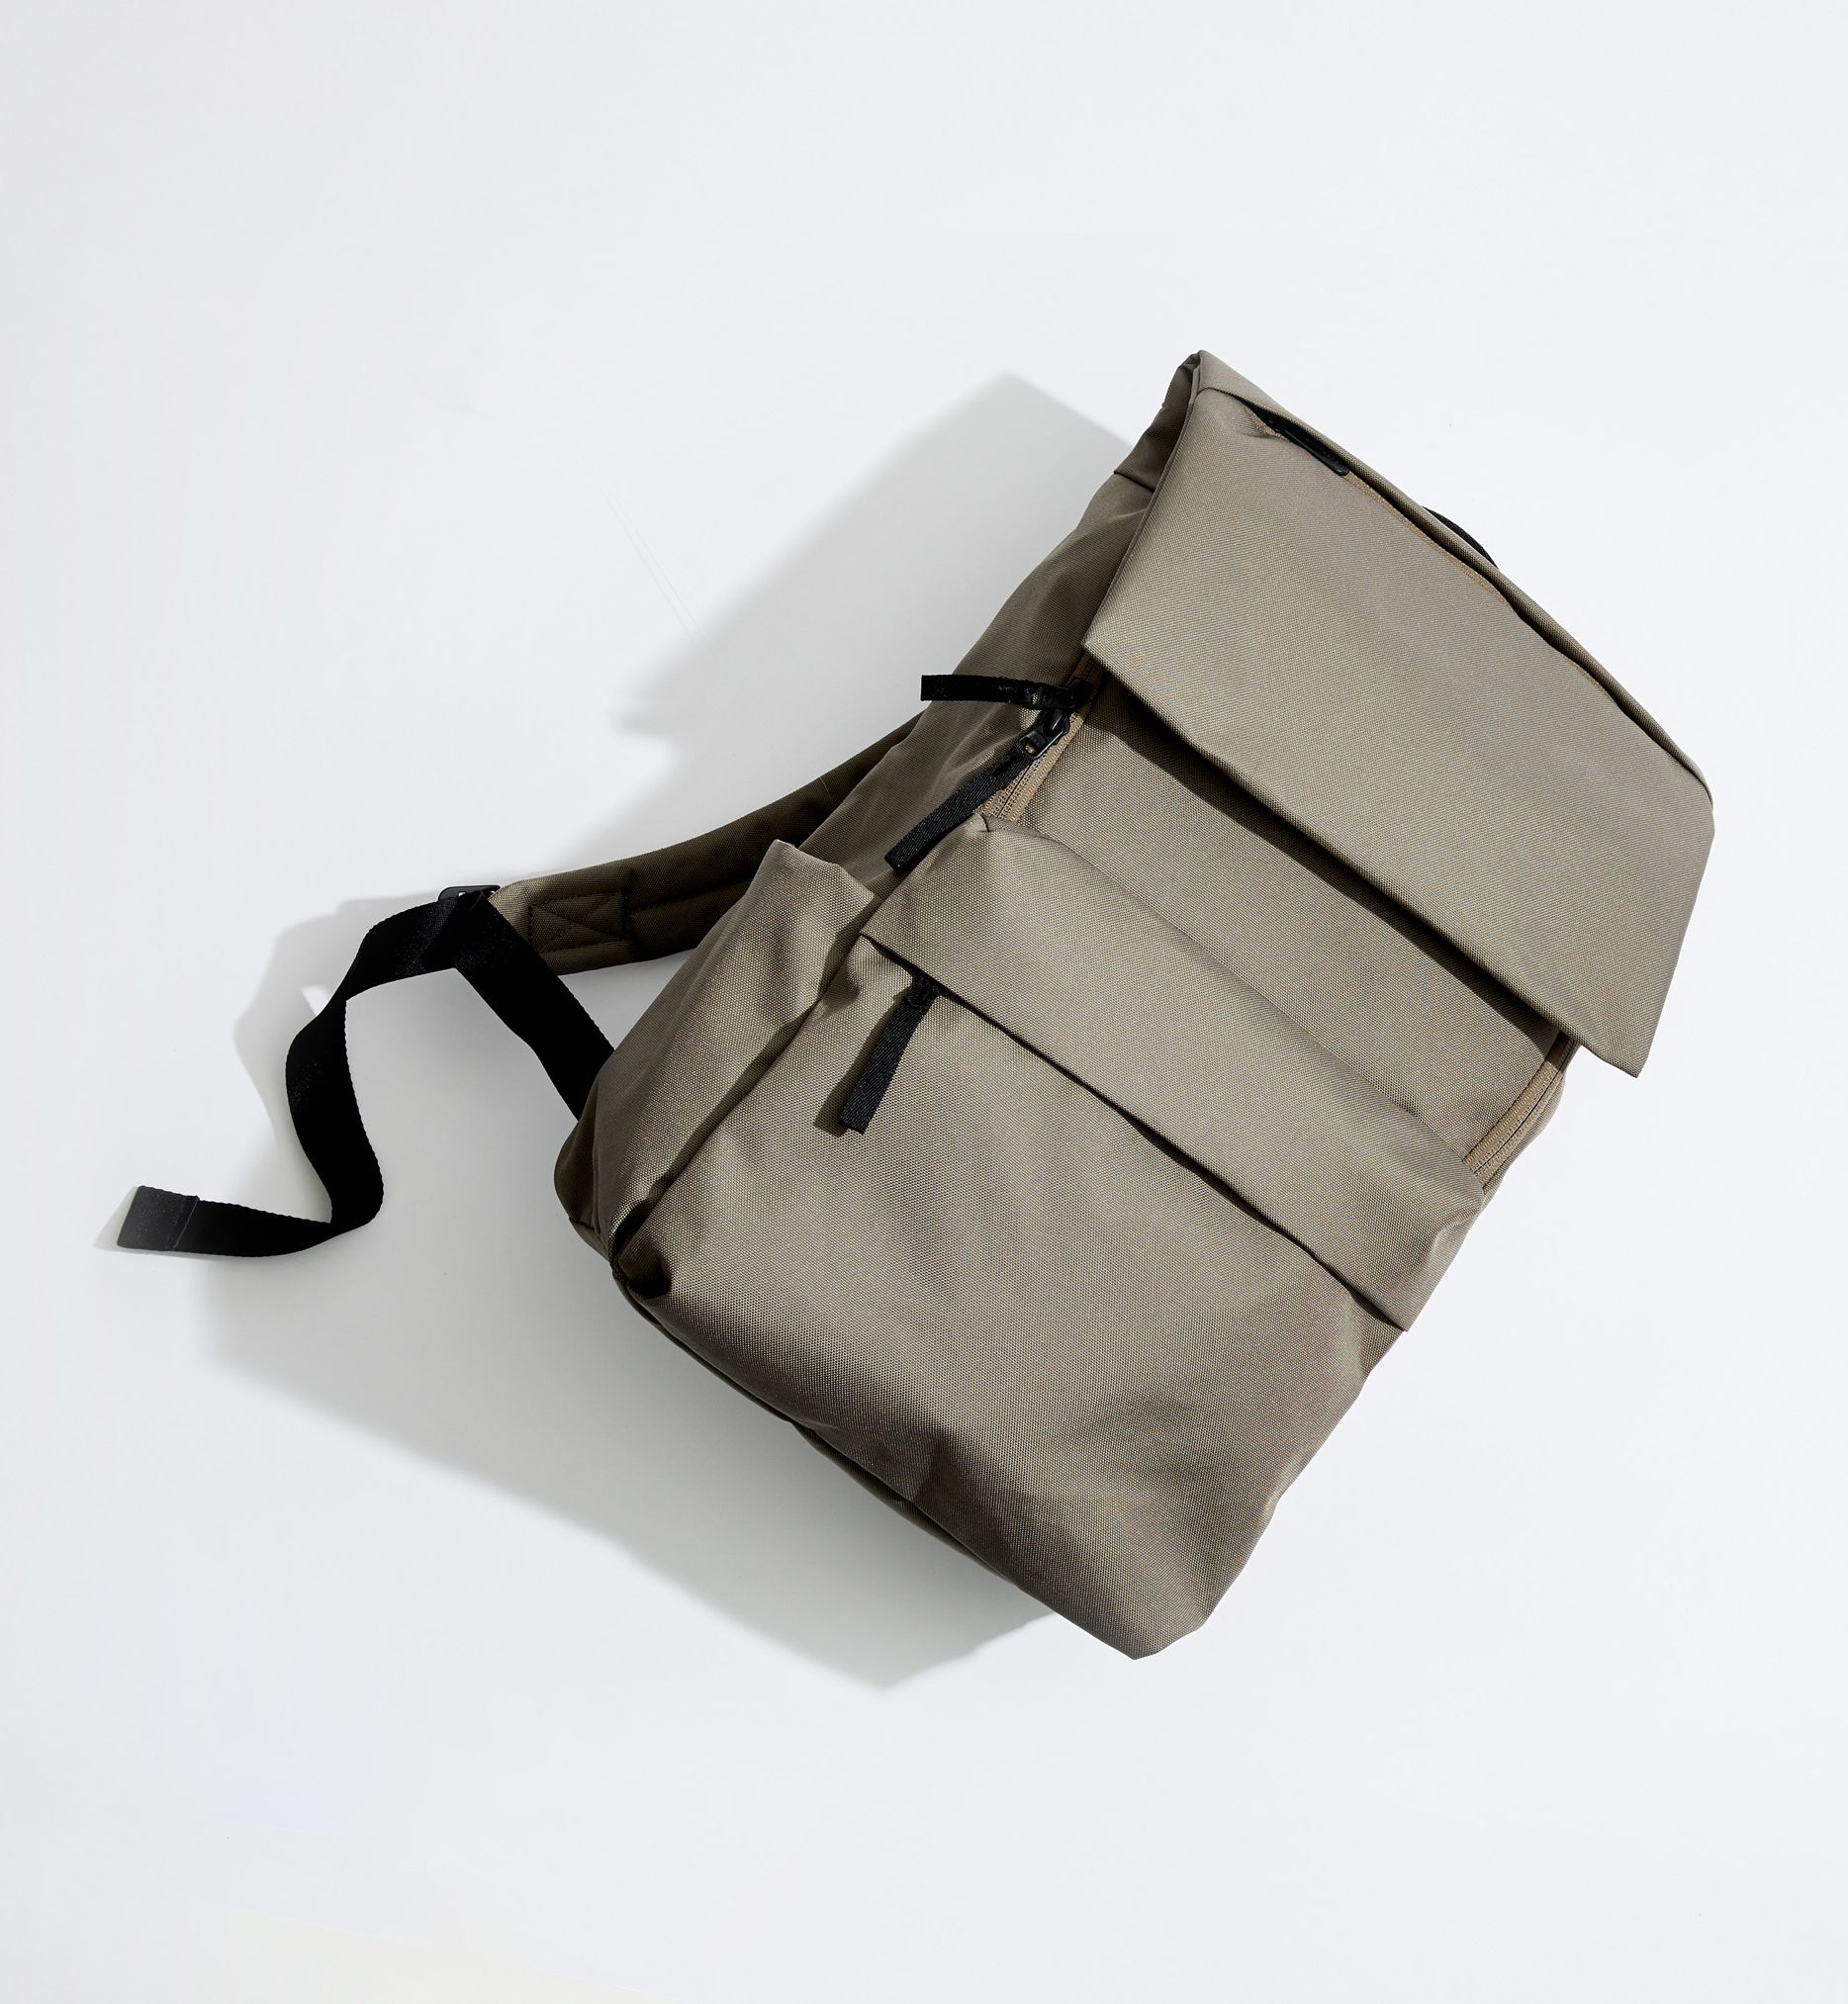 Everlane ReNew Transit Backpack Review - Best Everlane Bags for Men